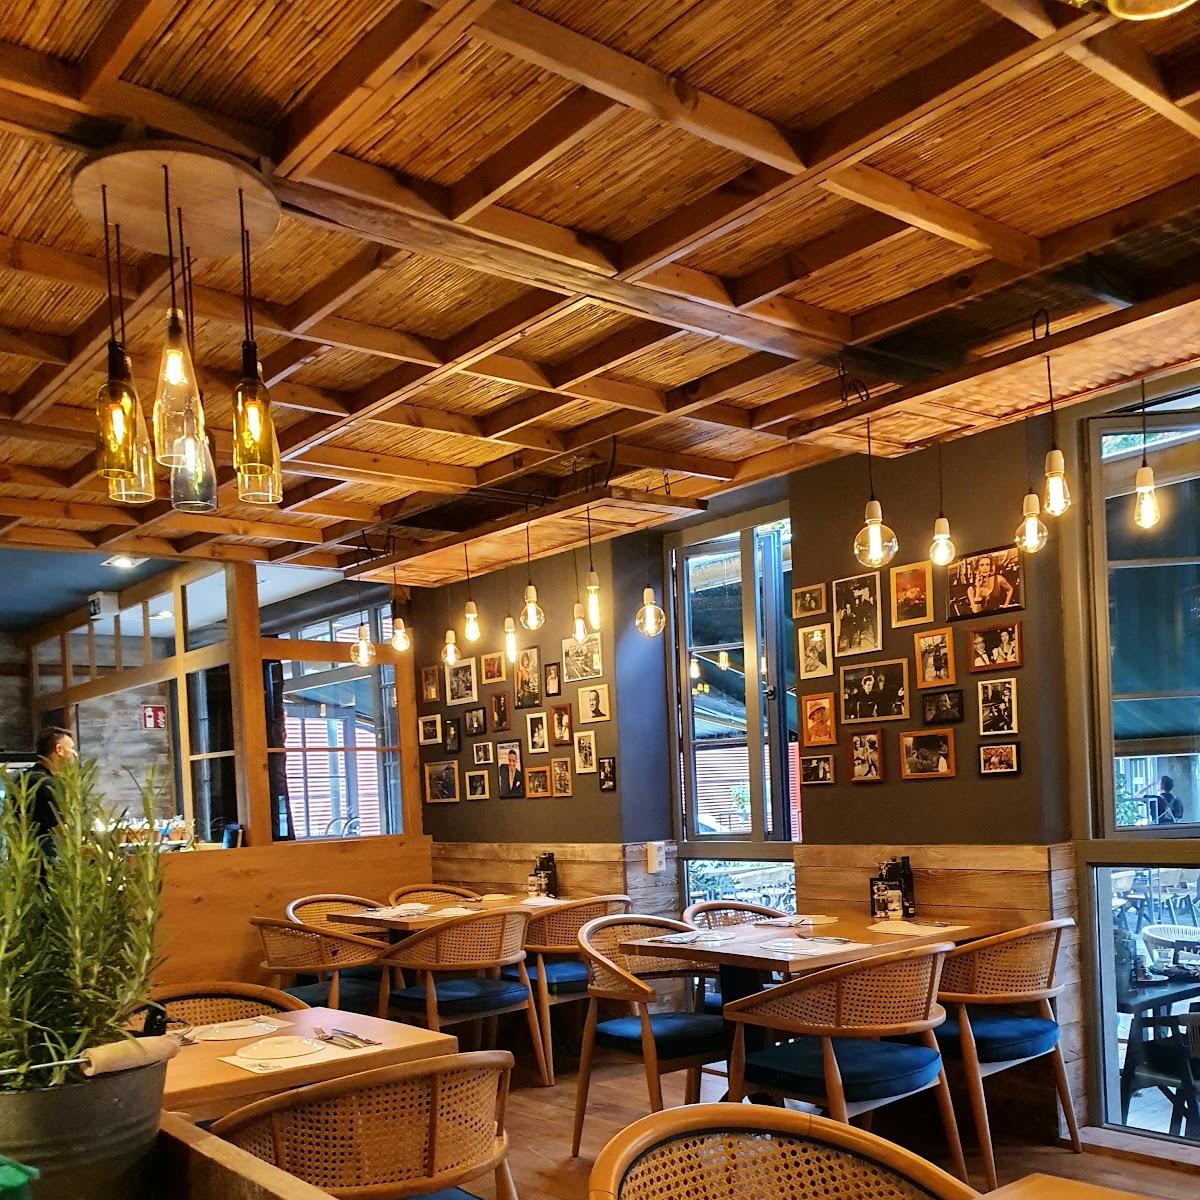 Restaurant "NEO Greek Grill Bar" in Bruchsal